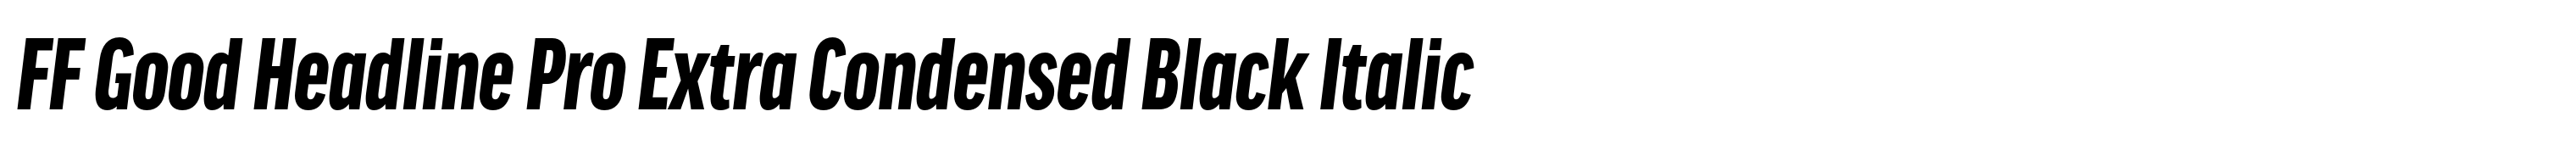 FF Good Headline Pro Extra Condensed Black Italic